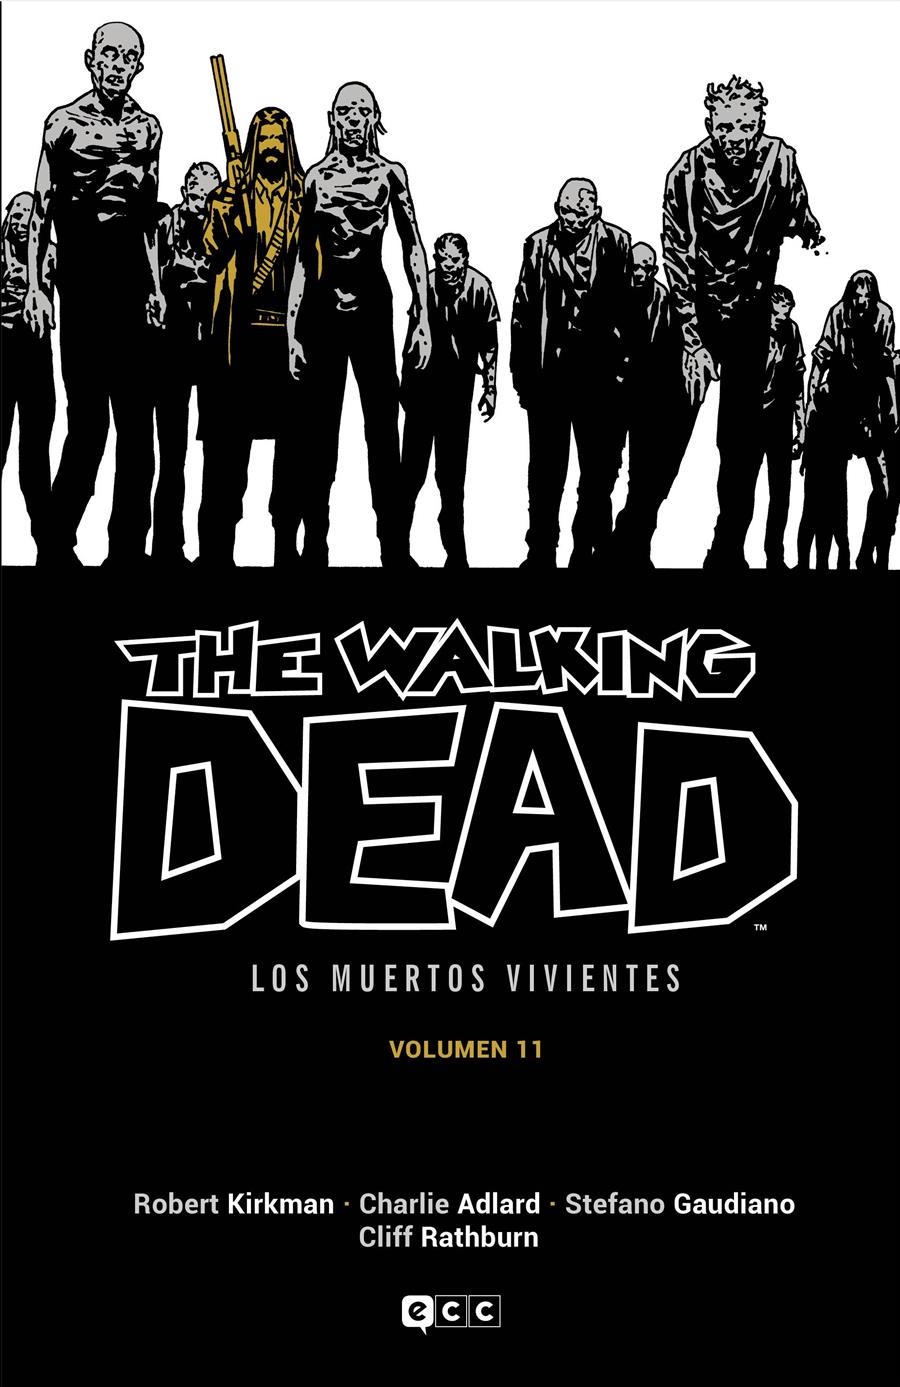 The Walking Dead (Los muertos vivientes) vol. 11 de 16 | N0922-ECC48 | Charlie Adlard / Robert Kirkman | Terra de Còmic - Tu tienda de cómics online especializada en cómics, manga y merchandising